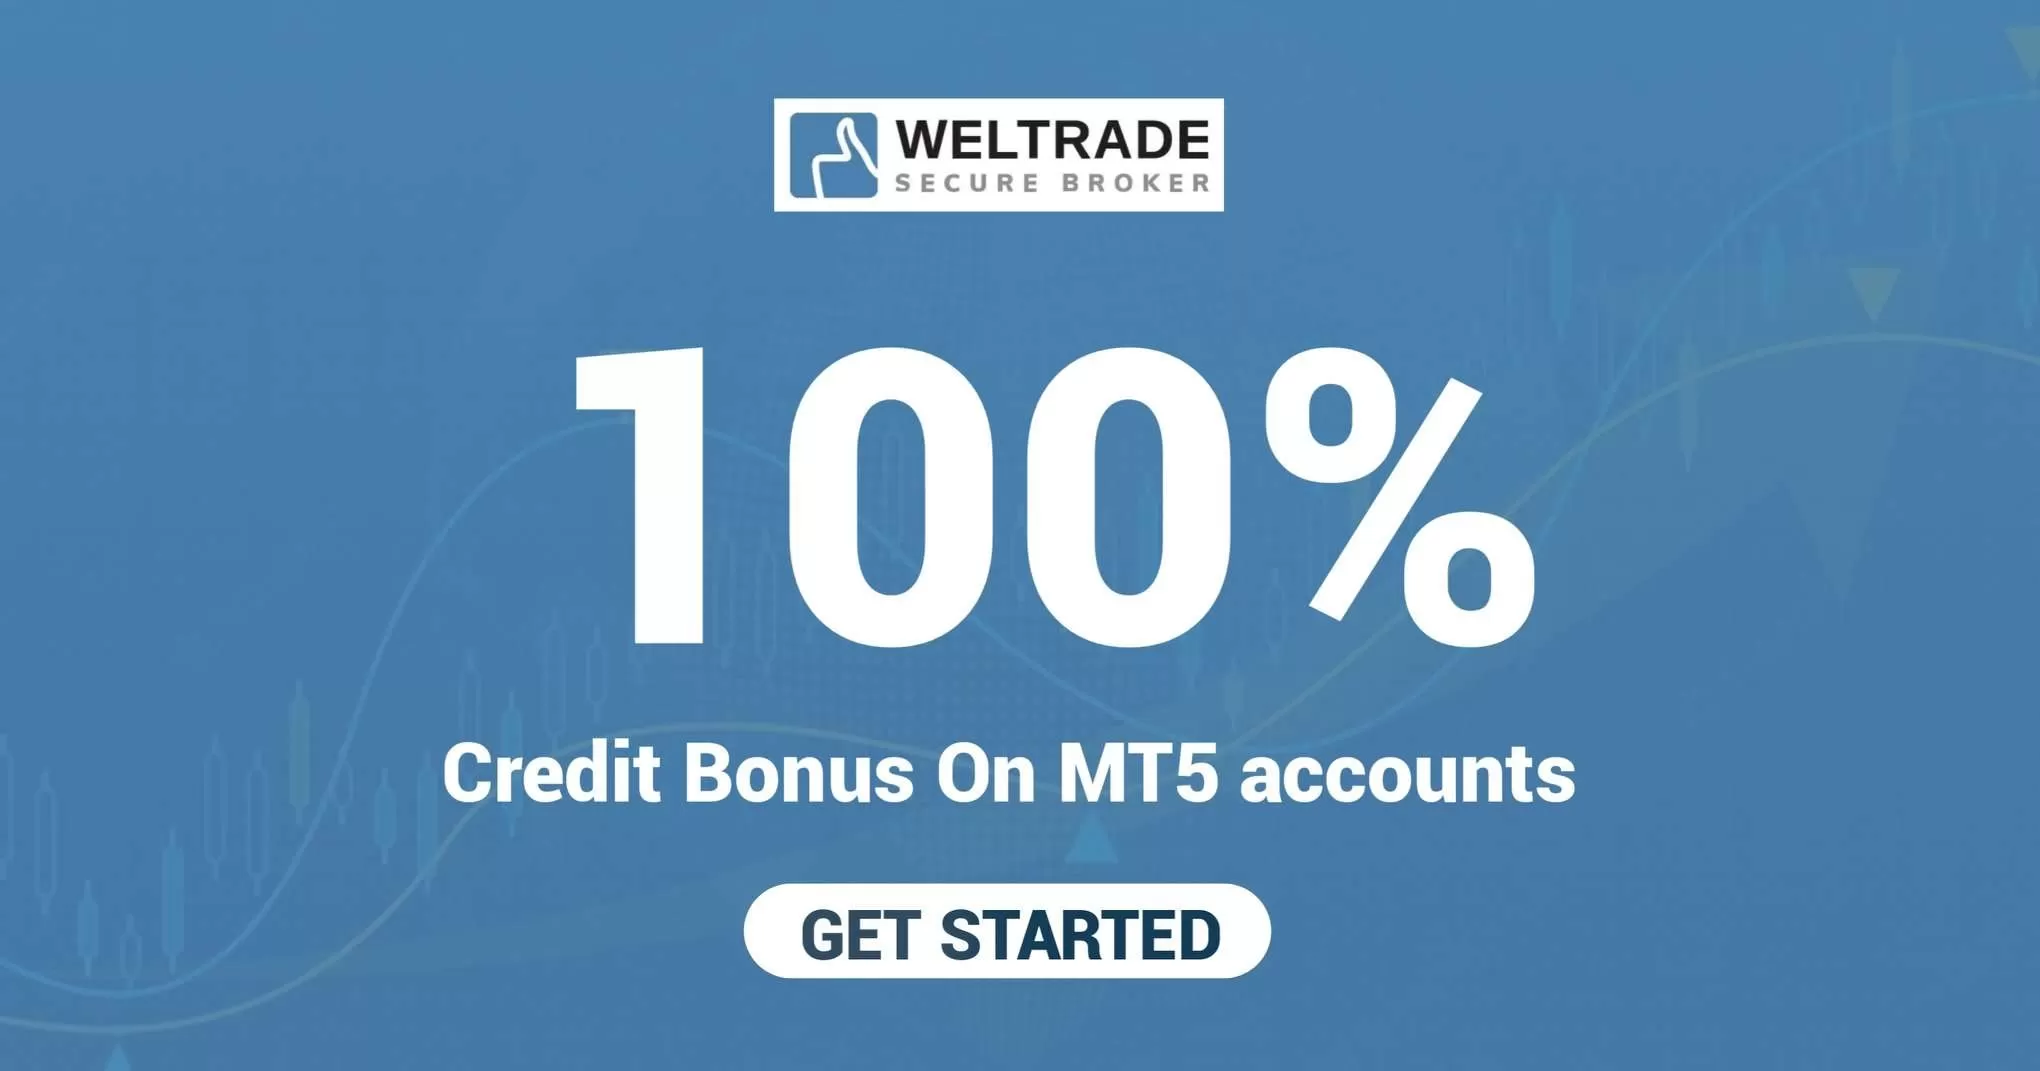 Weltrade 100% Credit Bonus On MT5 Accouns 